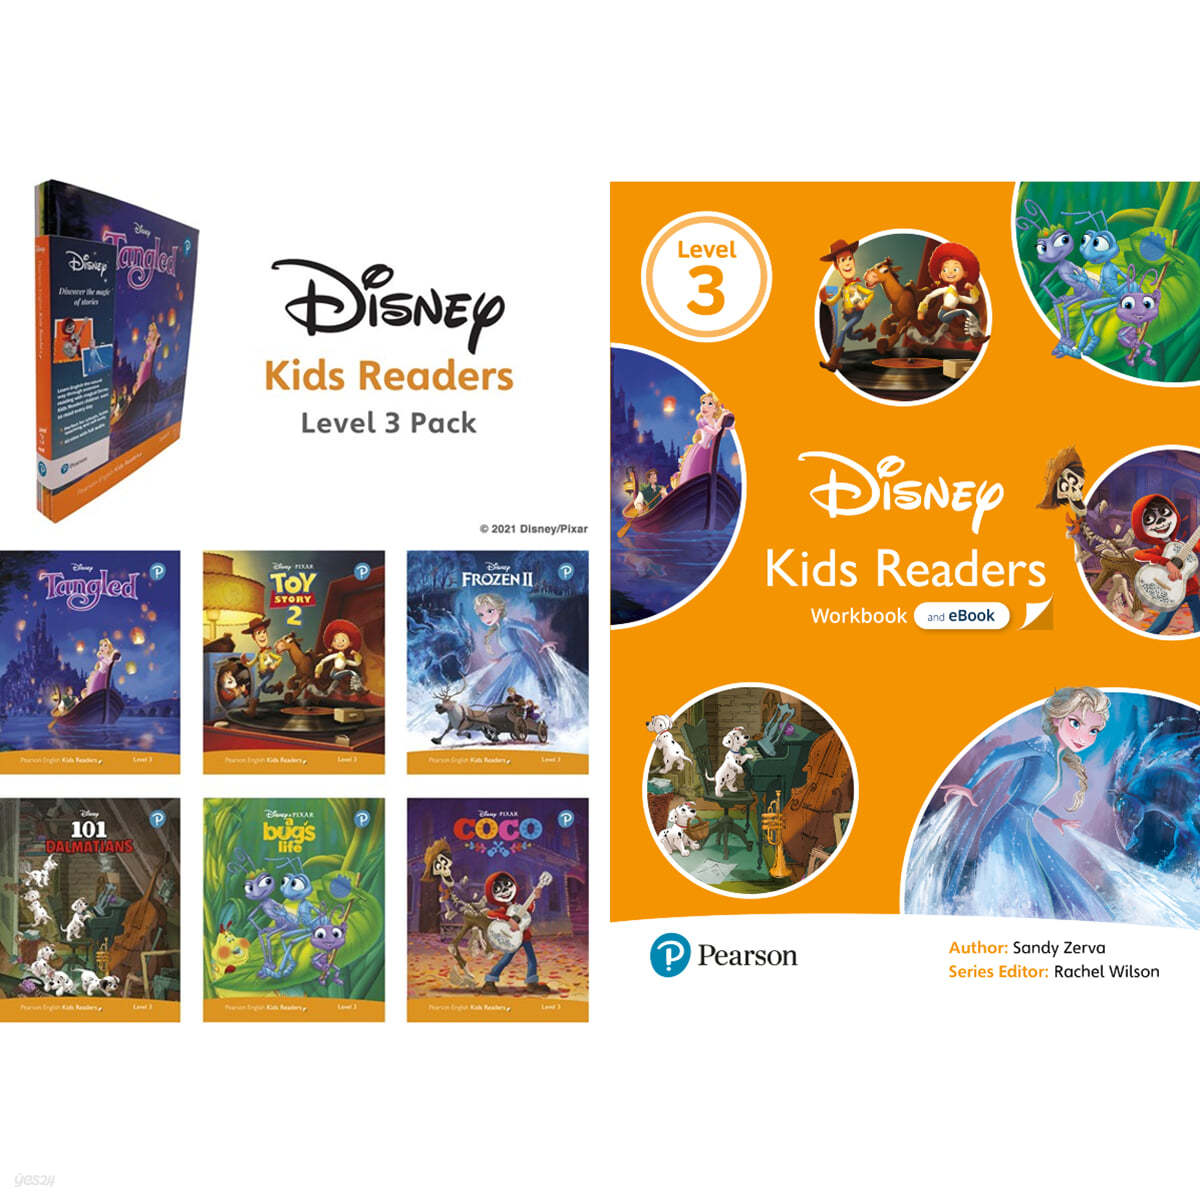 Disney Kids Readers Level 3 세트 (Pack + Workbook)